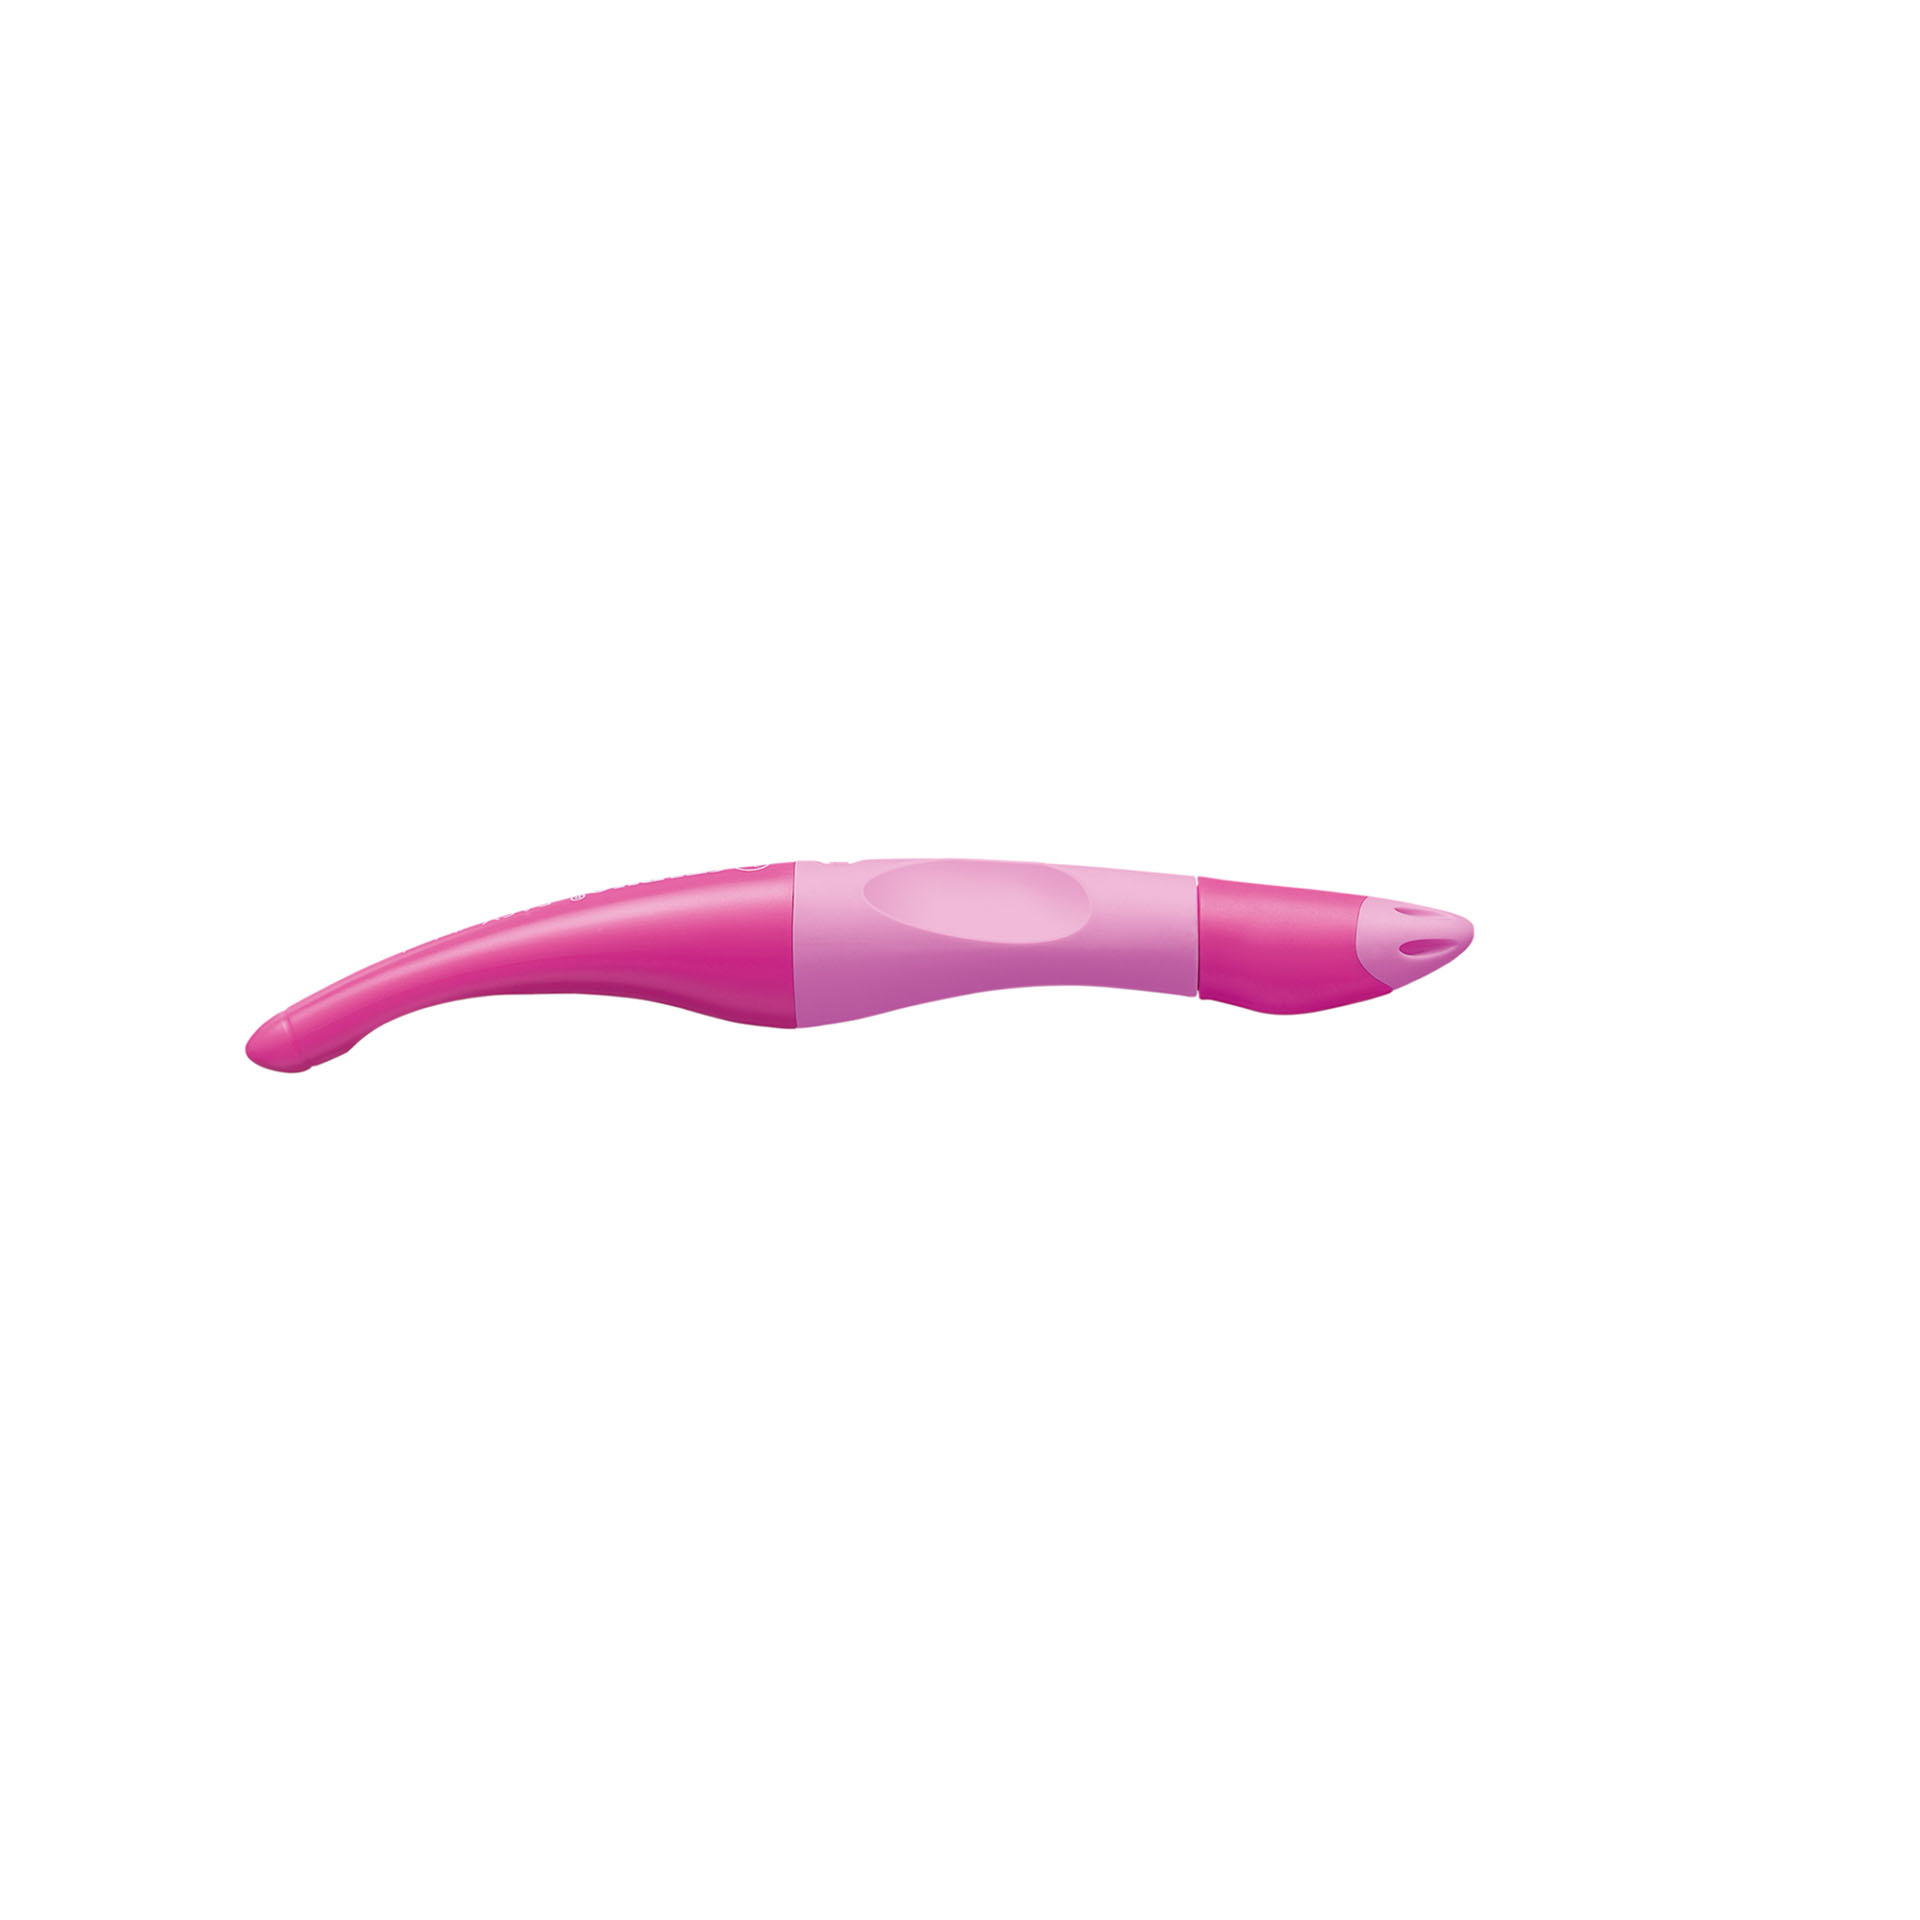 Penna Roller Ergonomica - Stabilo Easyoriginal Per Destrimani In Rosa - Cartuccia Blu Inclusa, , large